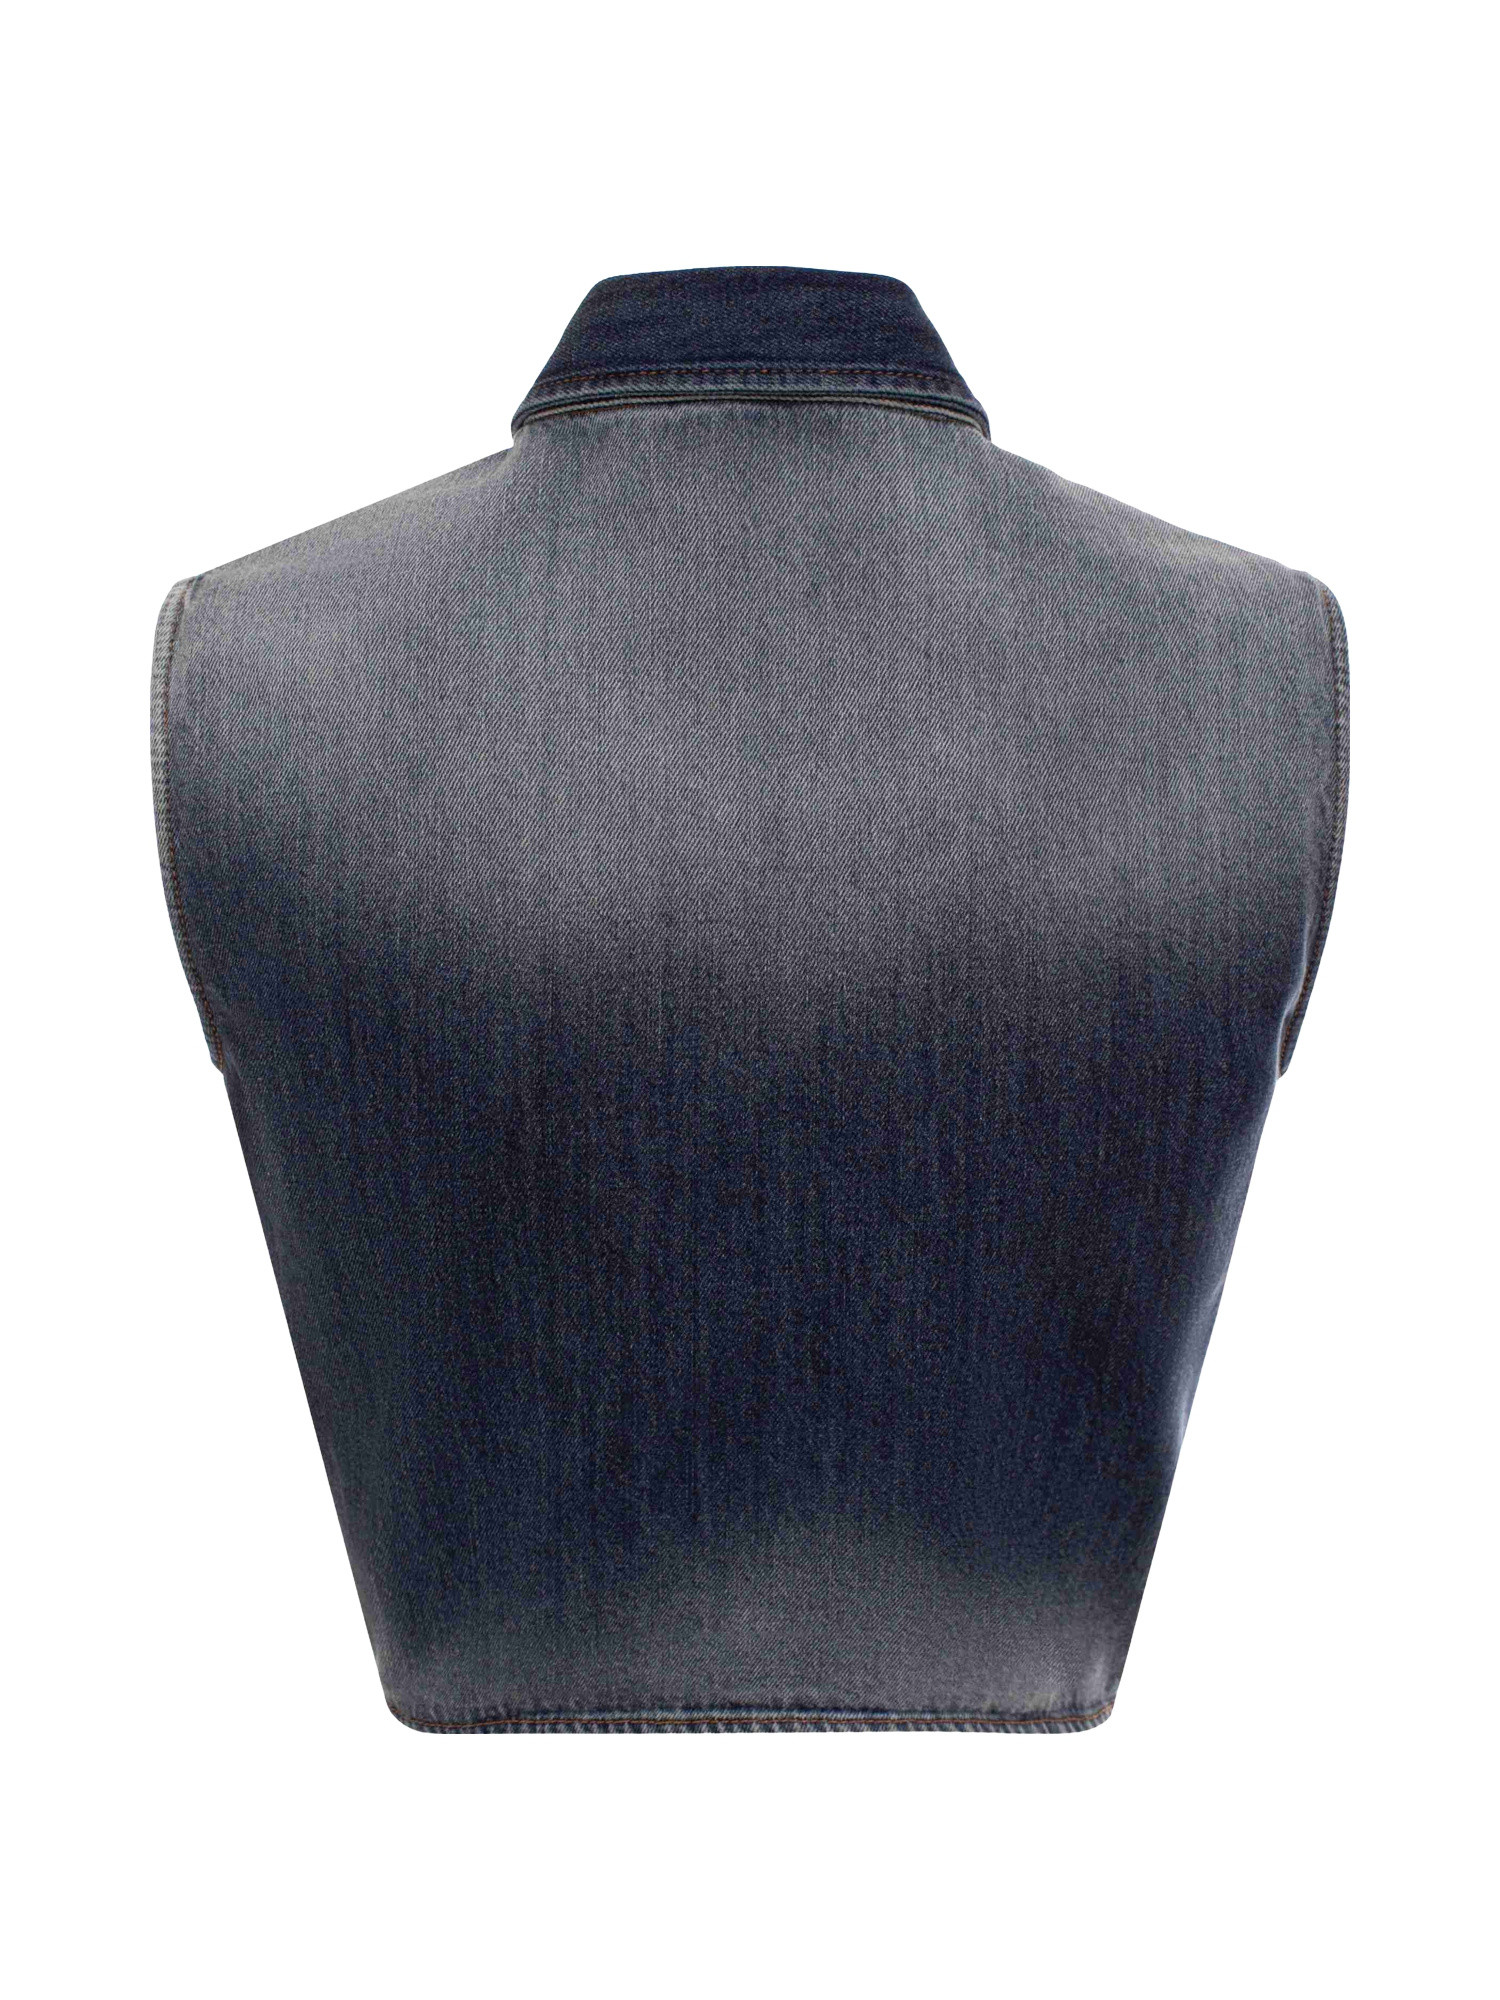 Chiara Ferragni - Sleeveless shirt with knot, Denim, large image number 1